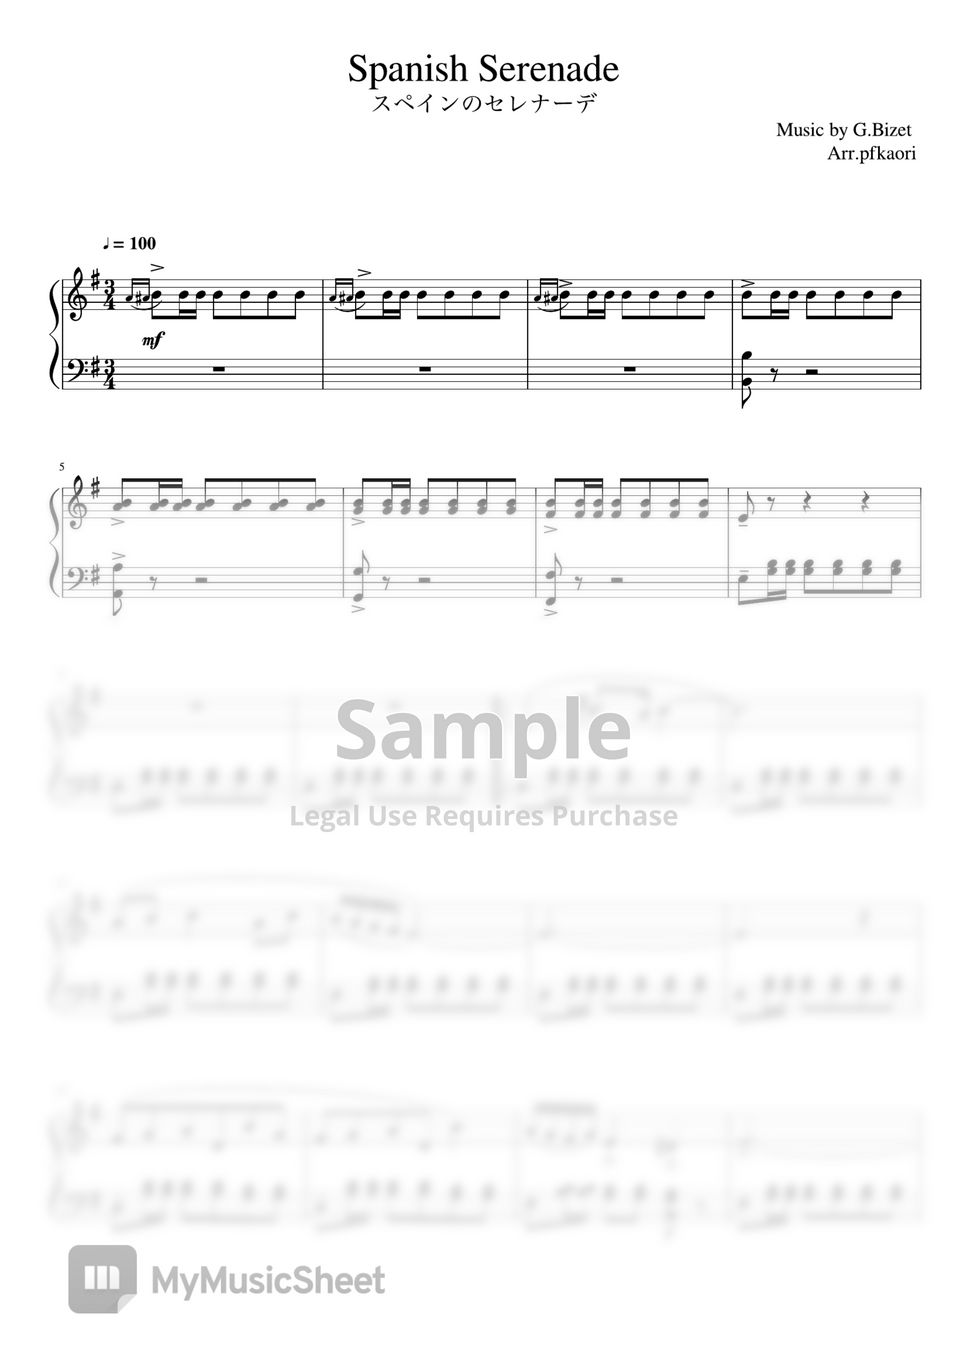 G.Bizet - Spanish Serenade(Em) (pianosolo/Intermediate) by pfkaori